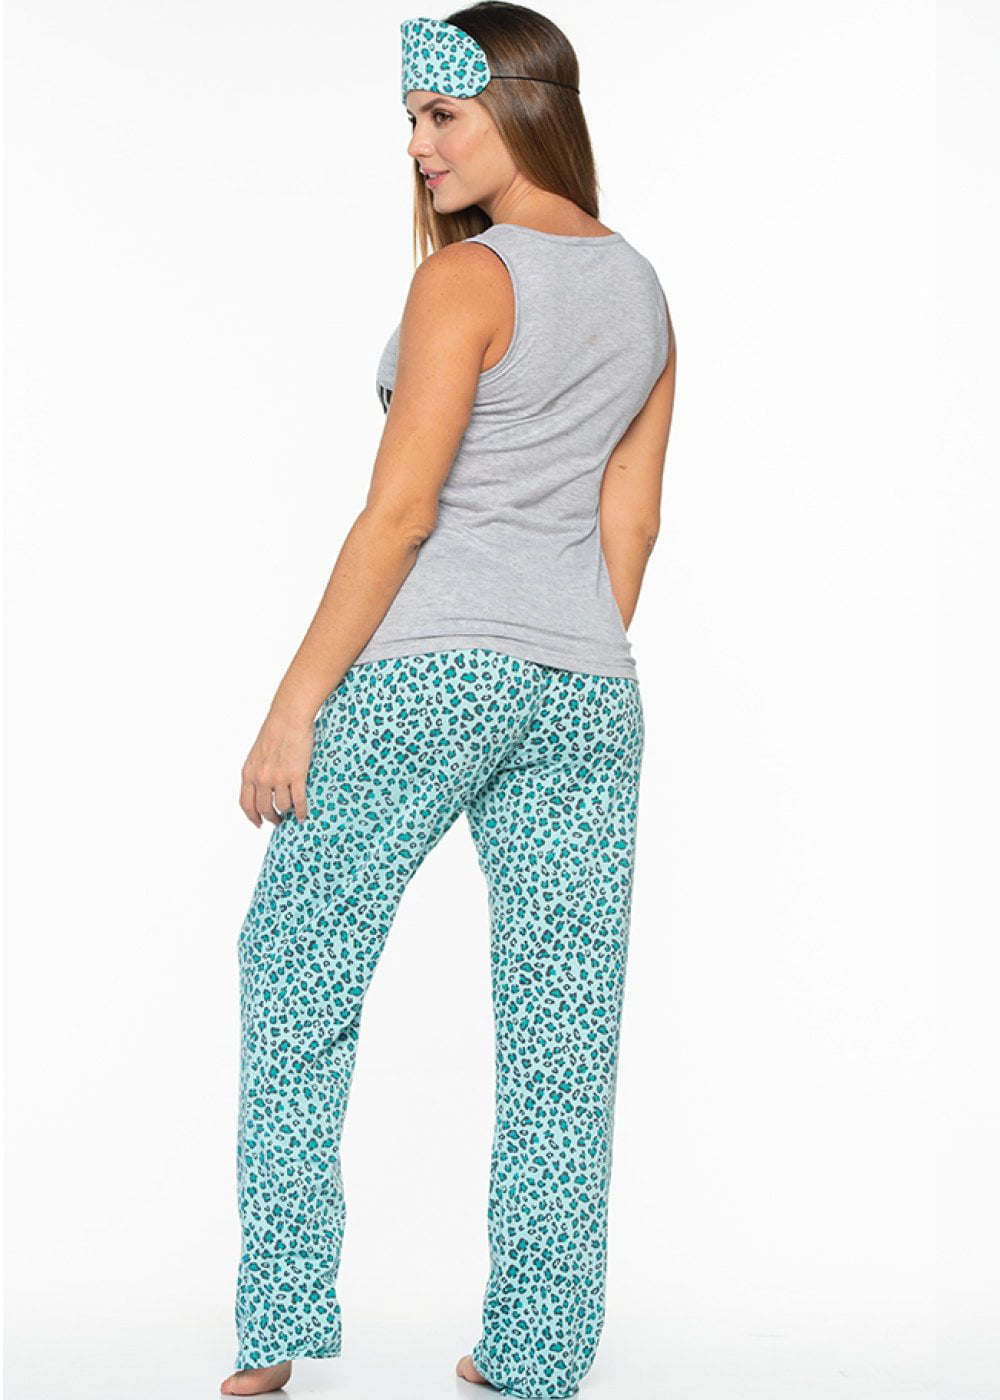 Details about   D'lunaas Shorts Pajama Set Athletic Design Cute Sleepwear Comfy Loungewear 